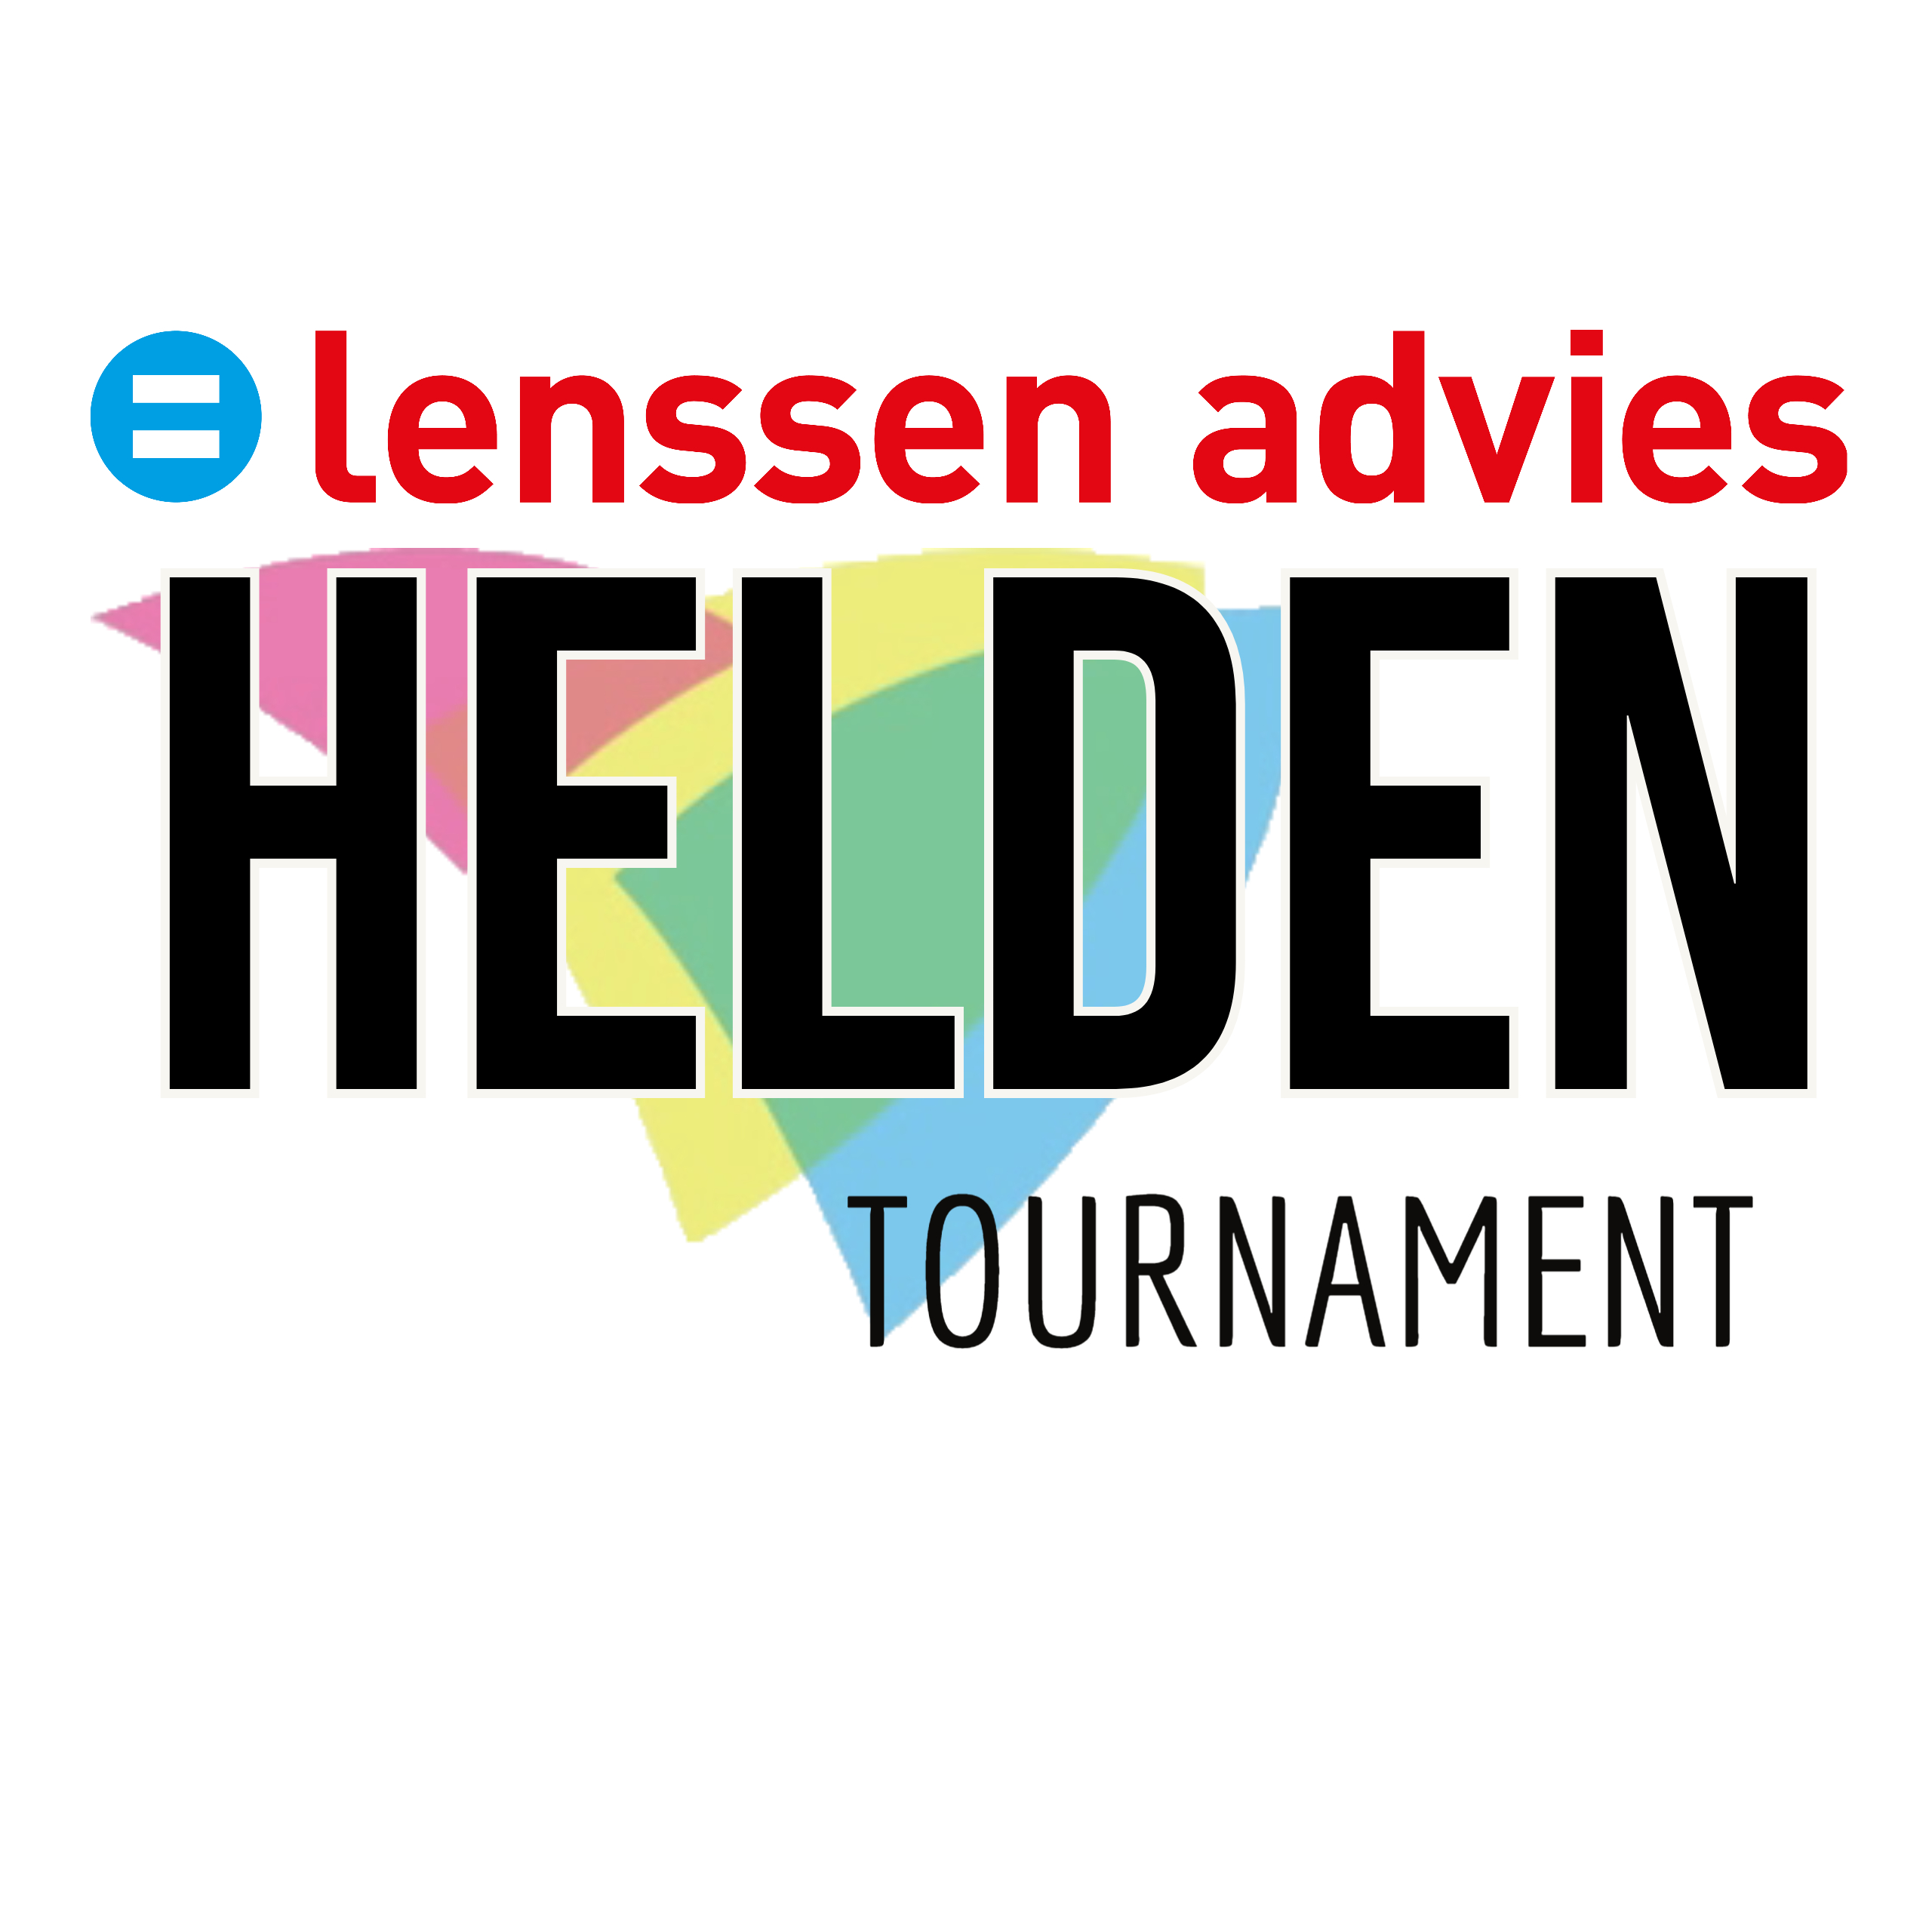 Lenssen advies tournament